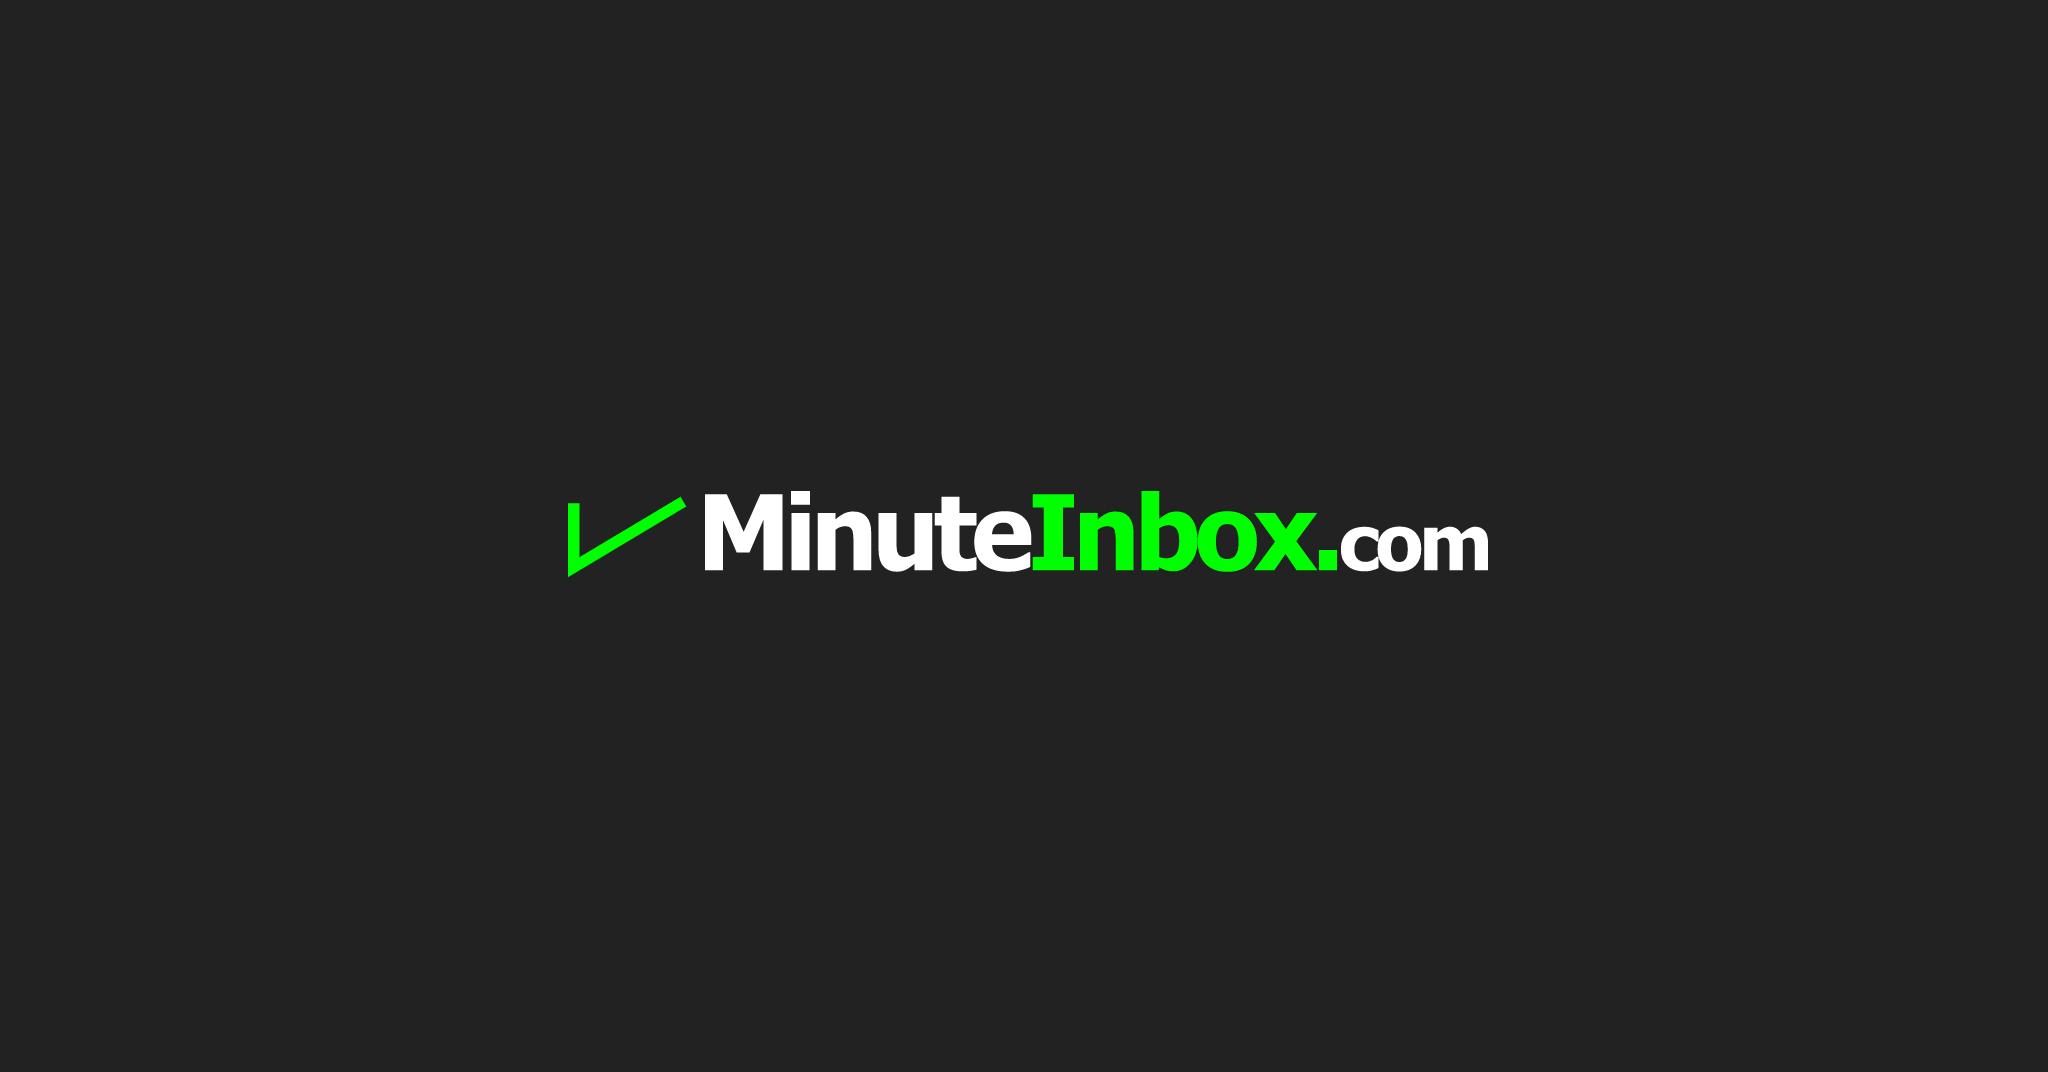 MinuteInbox